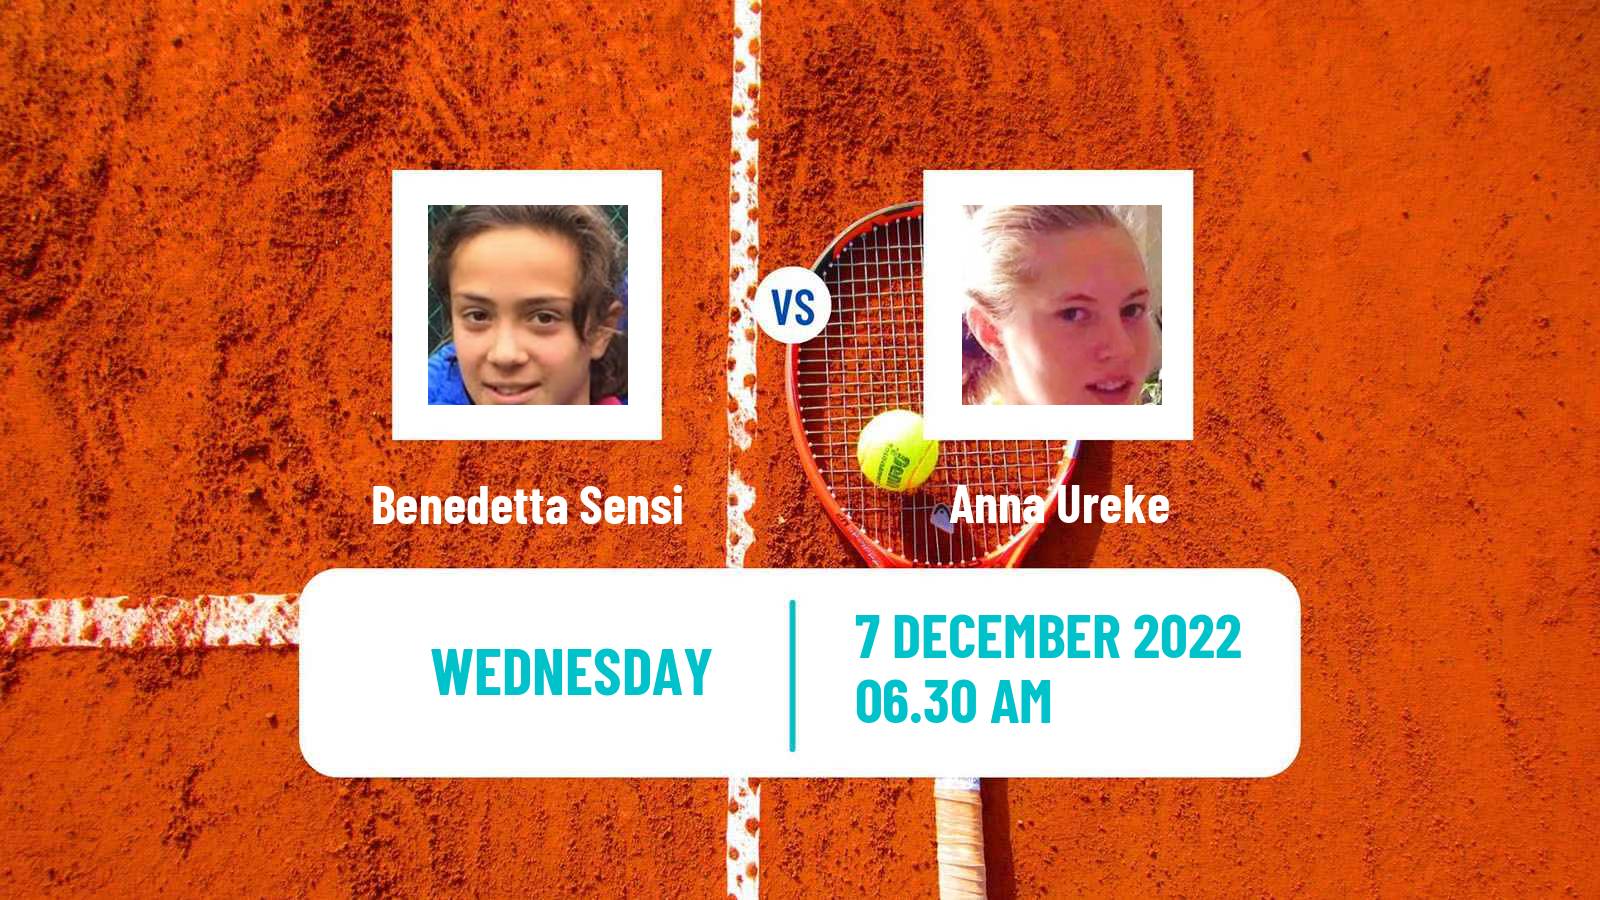 Tennis ITF Tournaments Benedetta Sensi - Anna Ureke